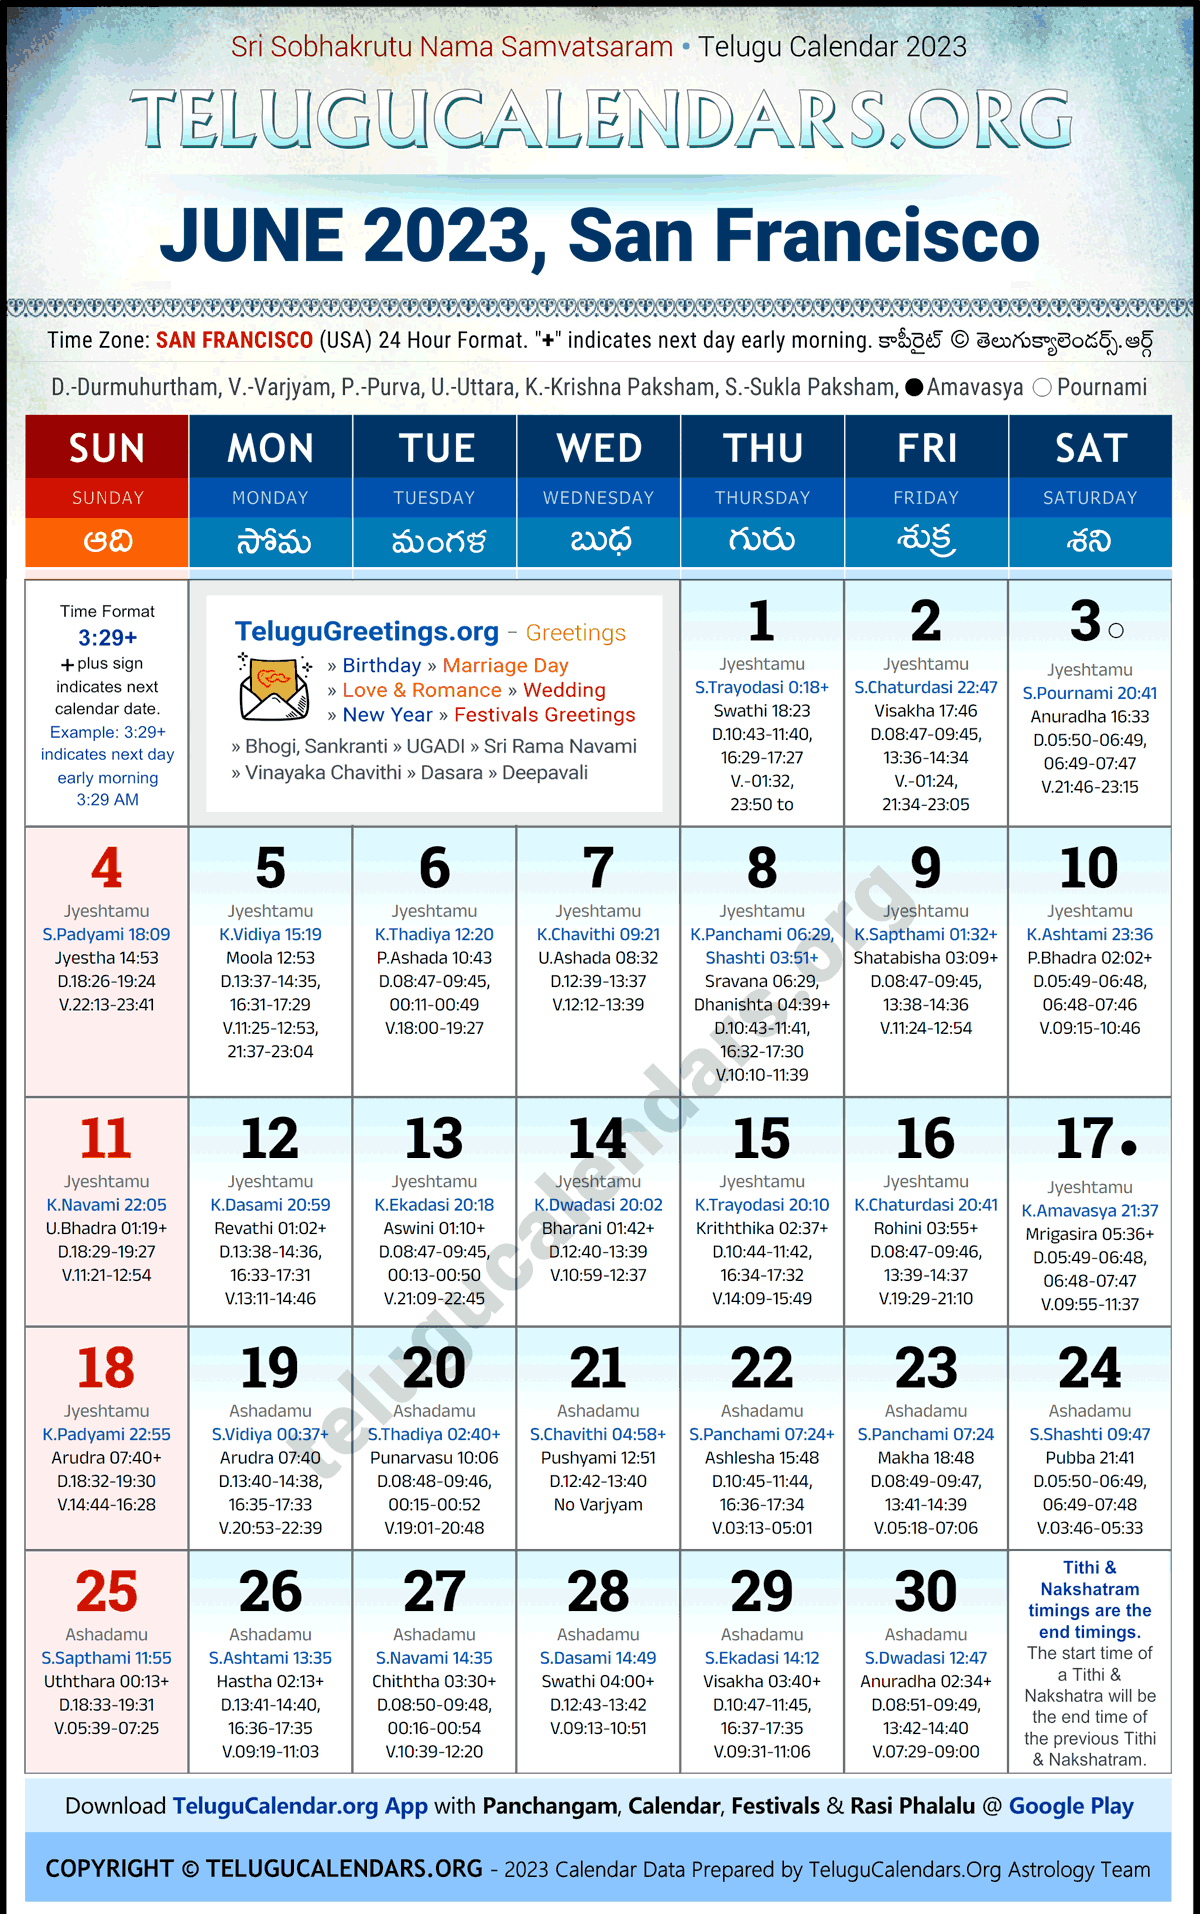 Telugu Calendar 2023 June Festivals for San Francisco